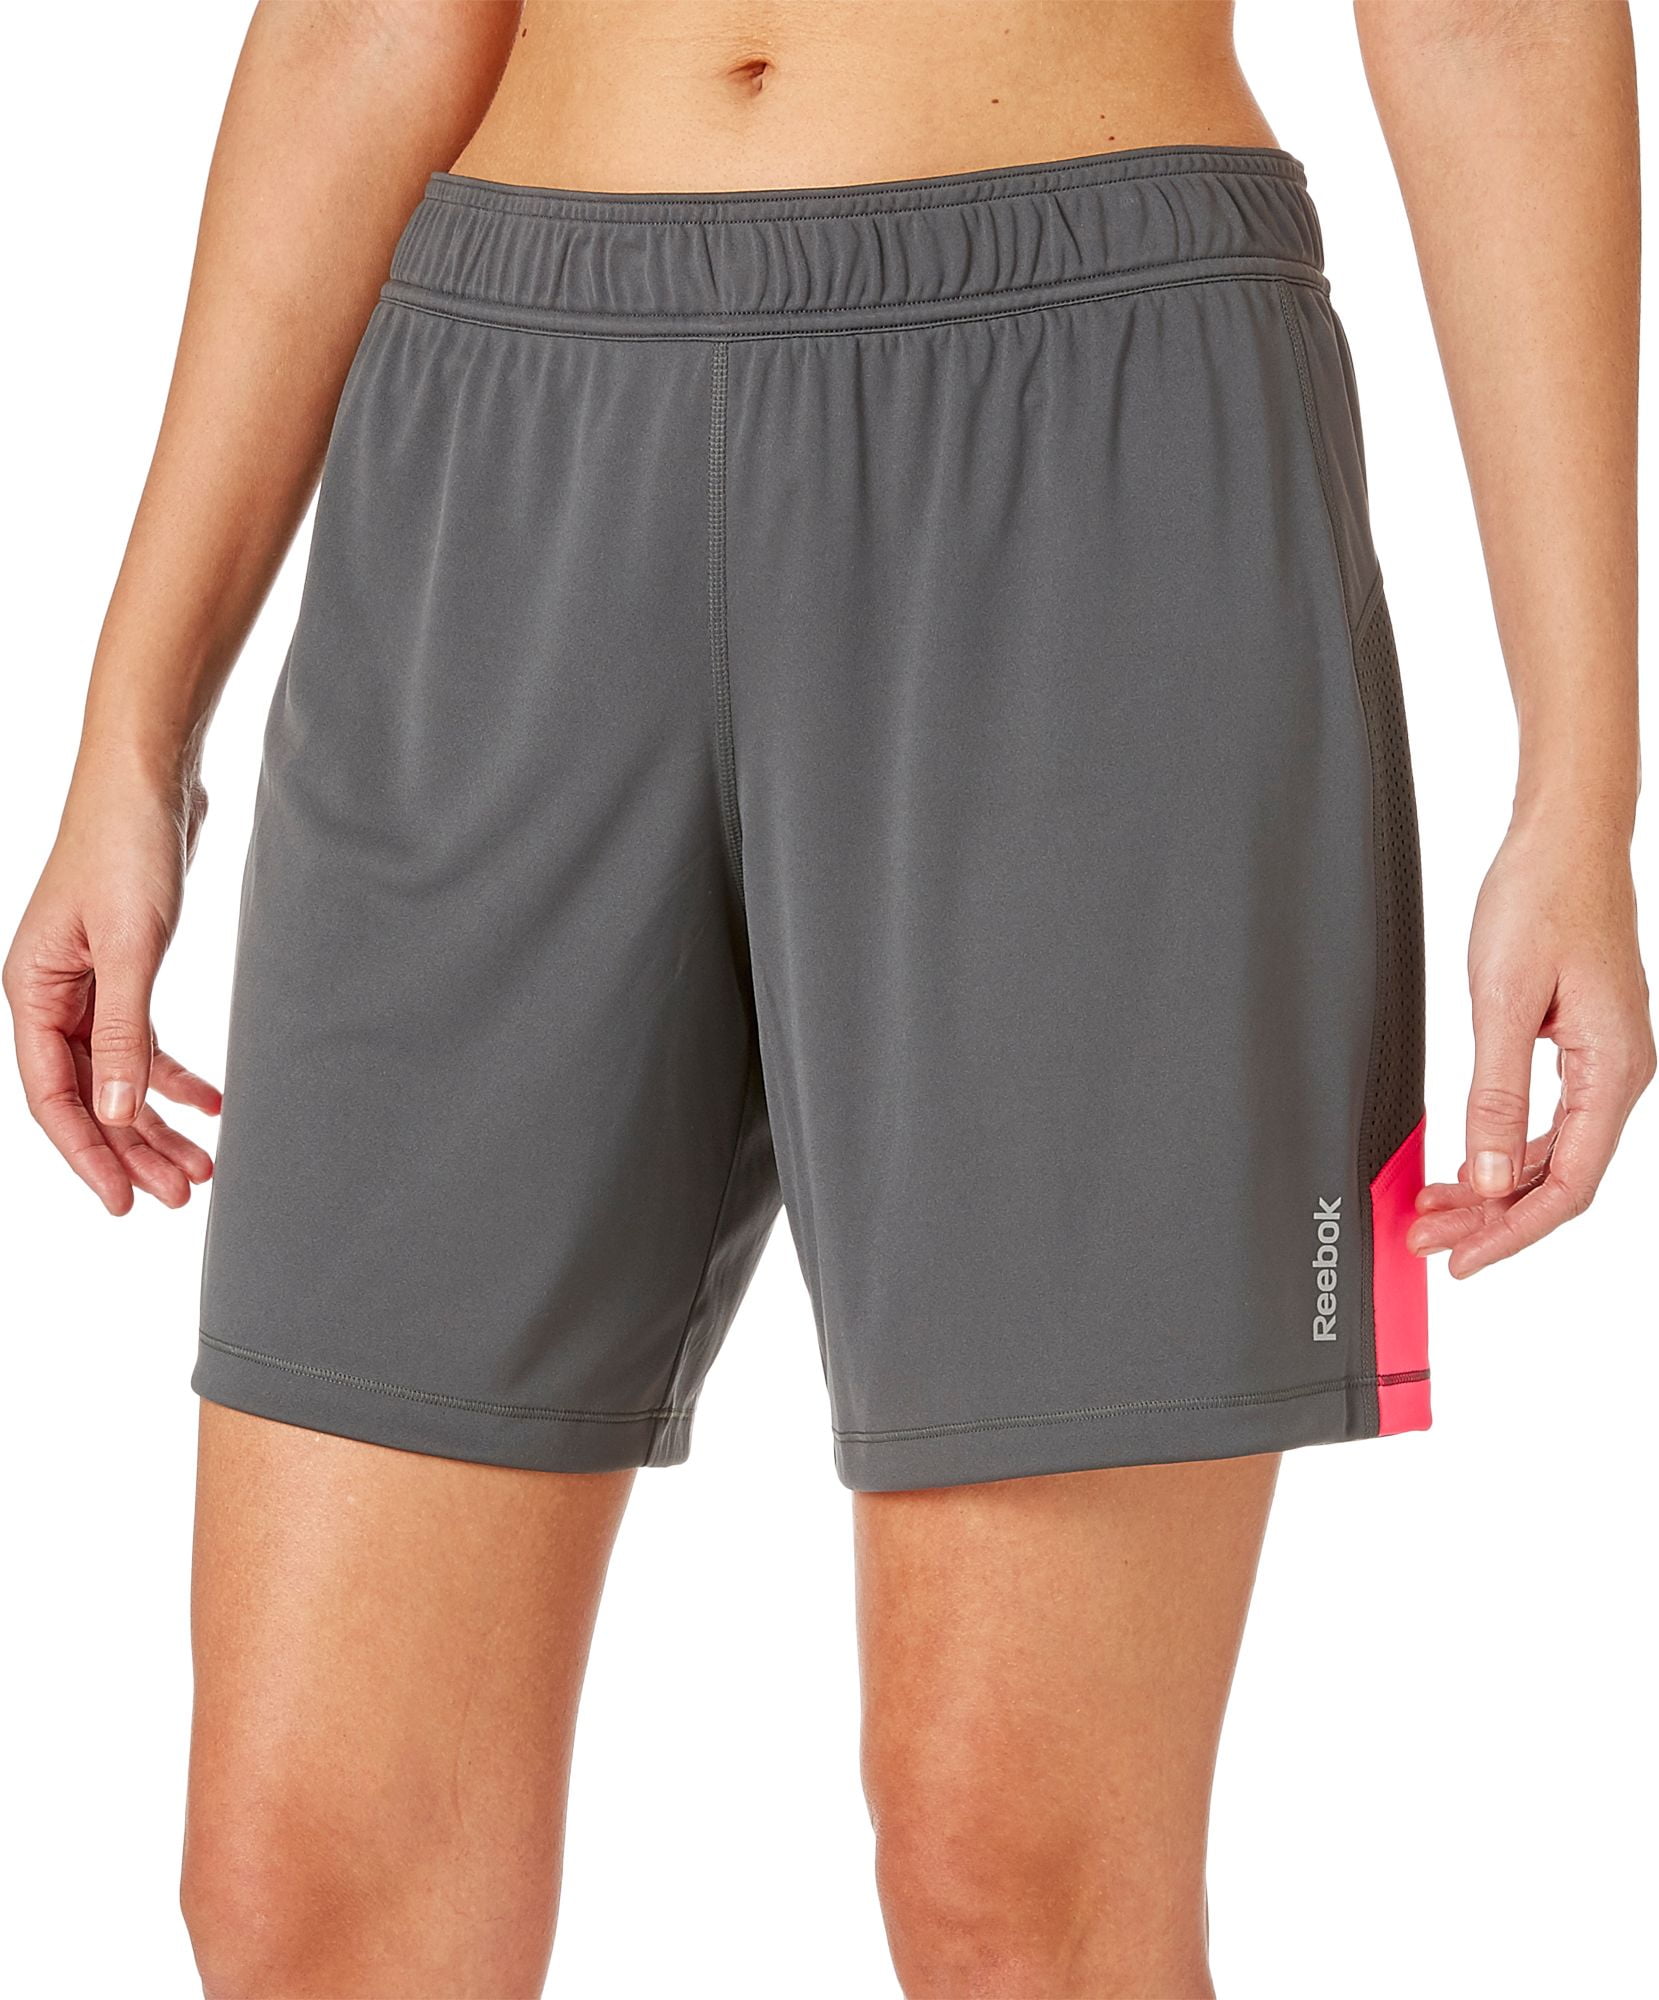 reebok women's 7 inch training shorts